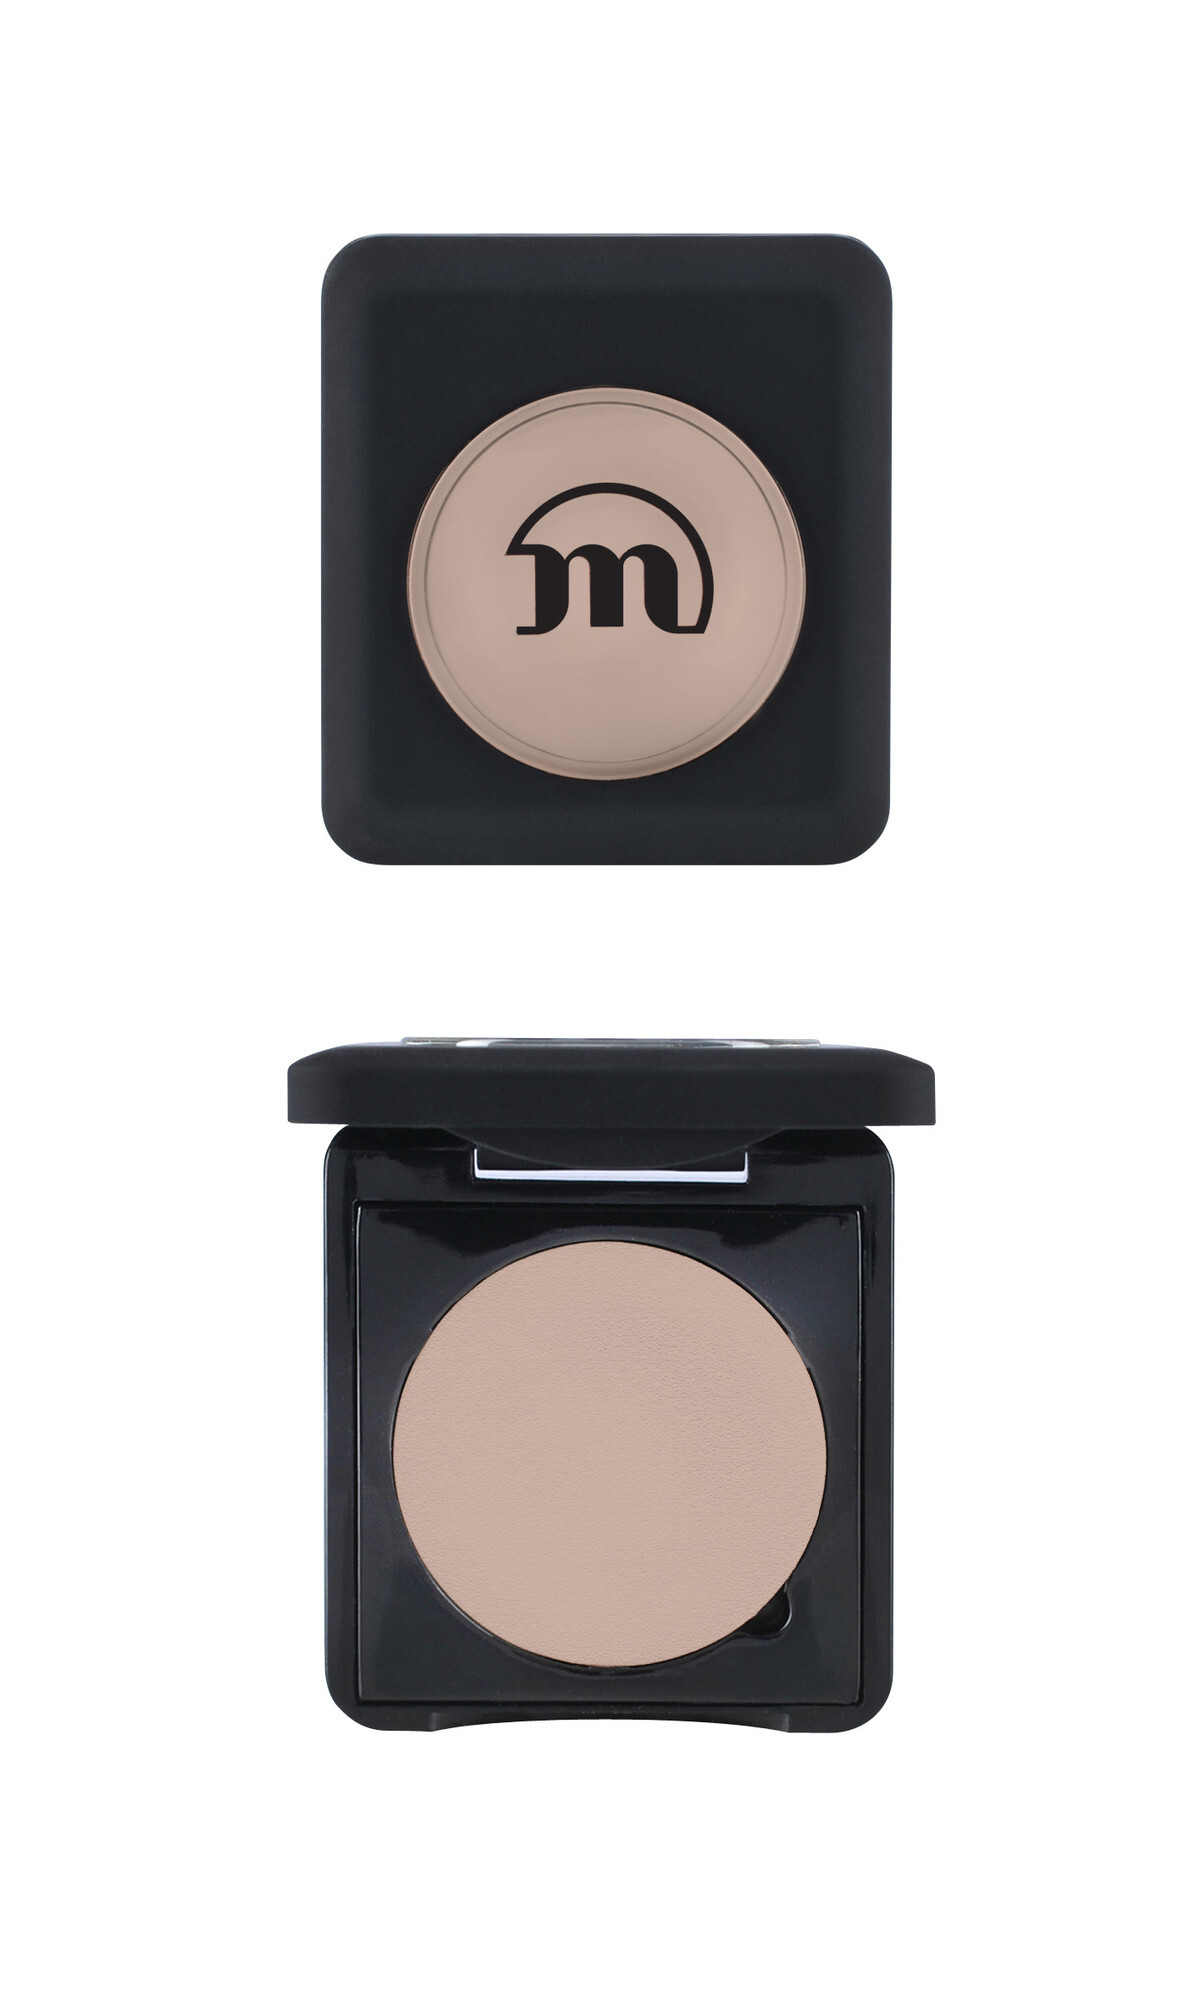 Make-up Studio Eyeshadow in Box Type B 436 B 436